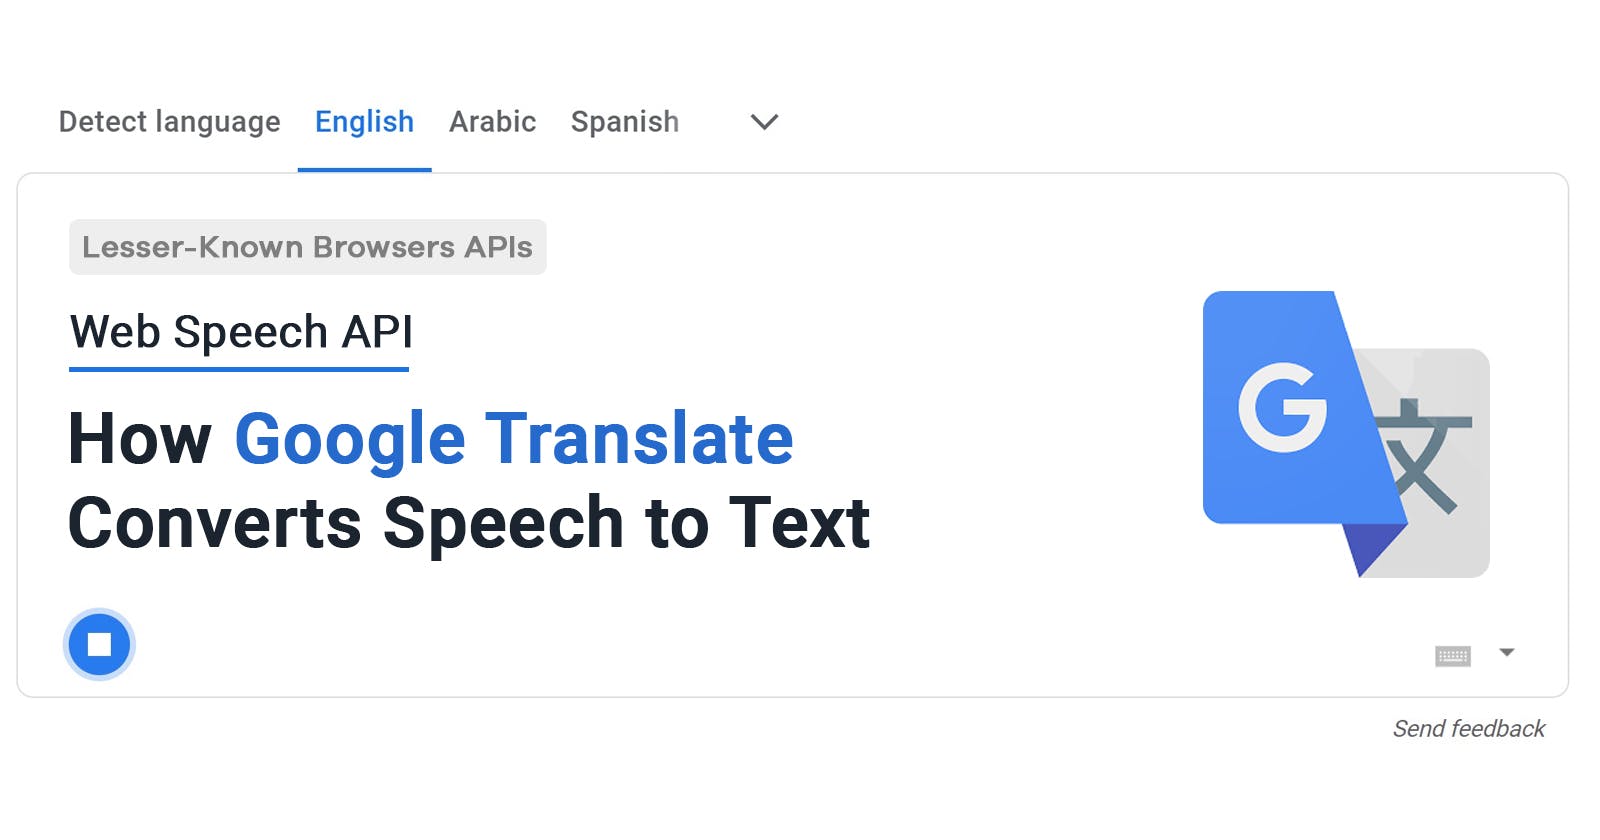 Web Speech API: How Google Translate Converts Speech to Text